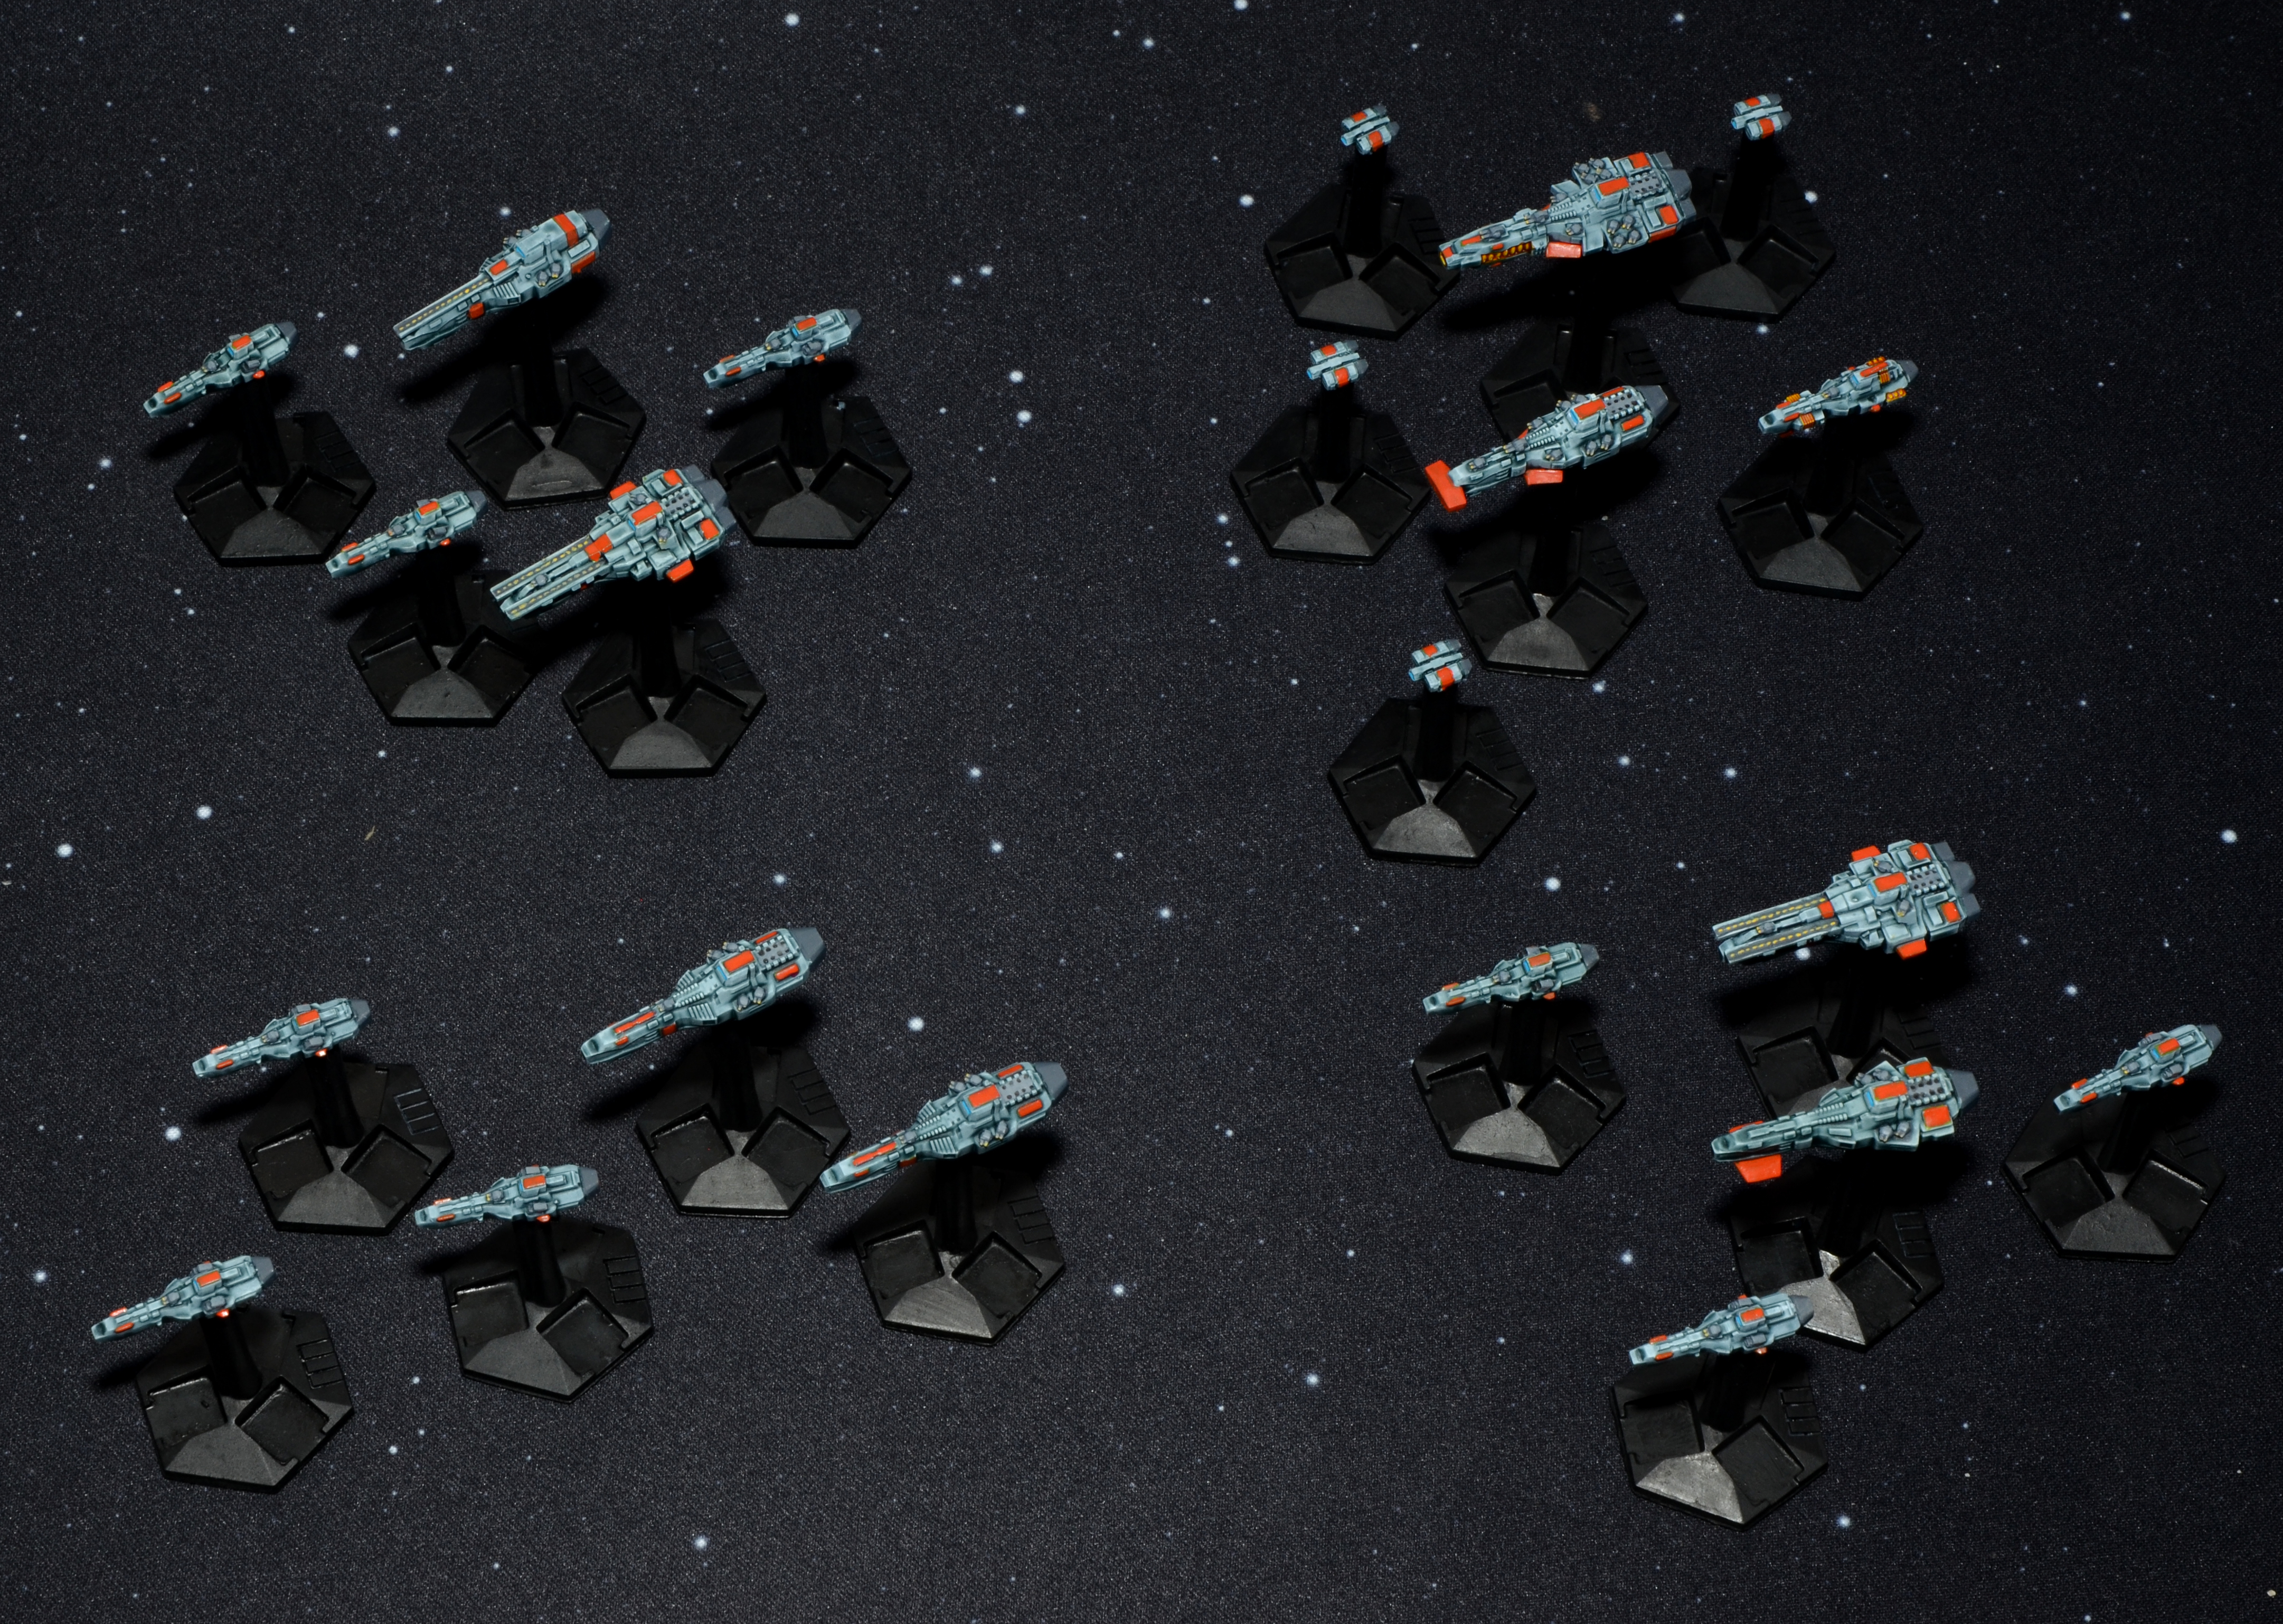 3D Printable SCI-FI Ships Fleet Pack - Empire of the Rising Sun